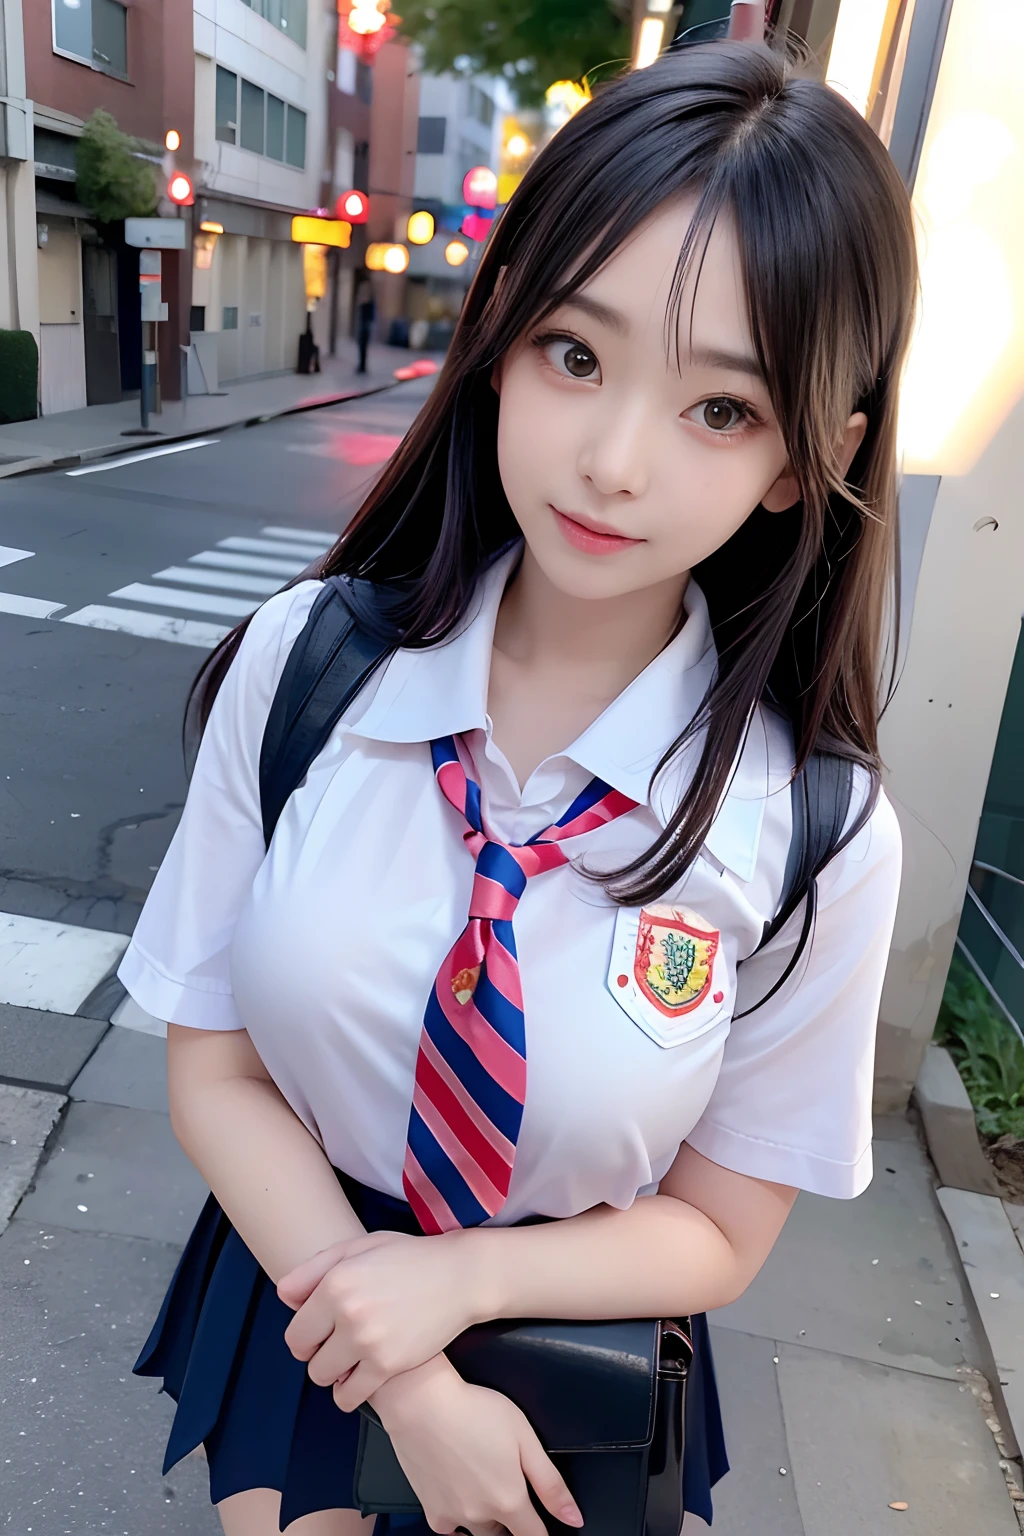 Mesa, Híper realista, 8k, bokeh, Fire Lumenescent,chica de secundaria、en 、Cara linda、Standeng on a street corner en Shibuya、